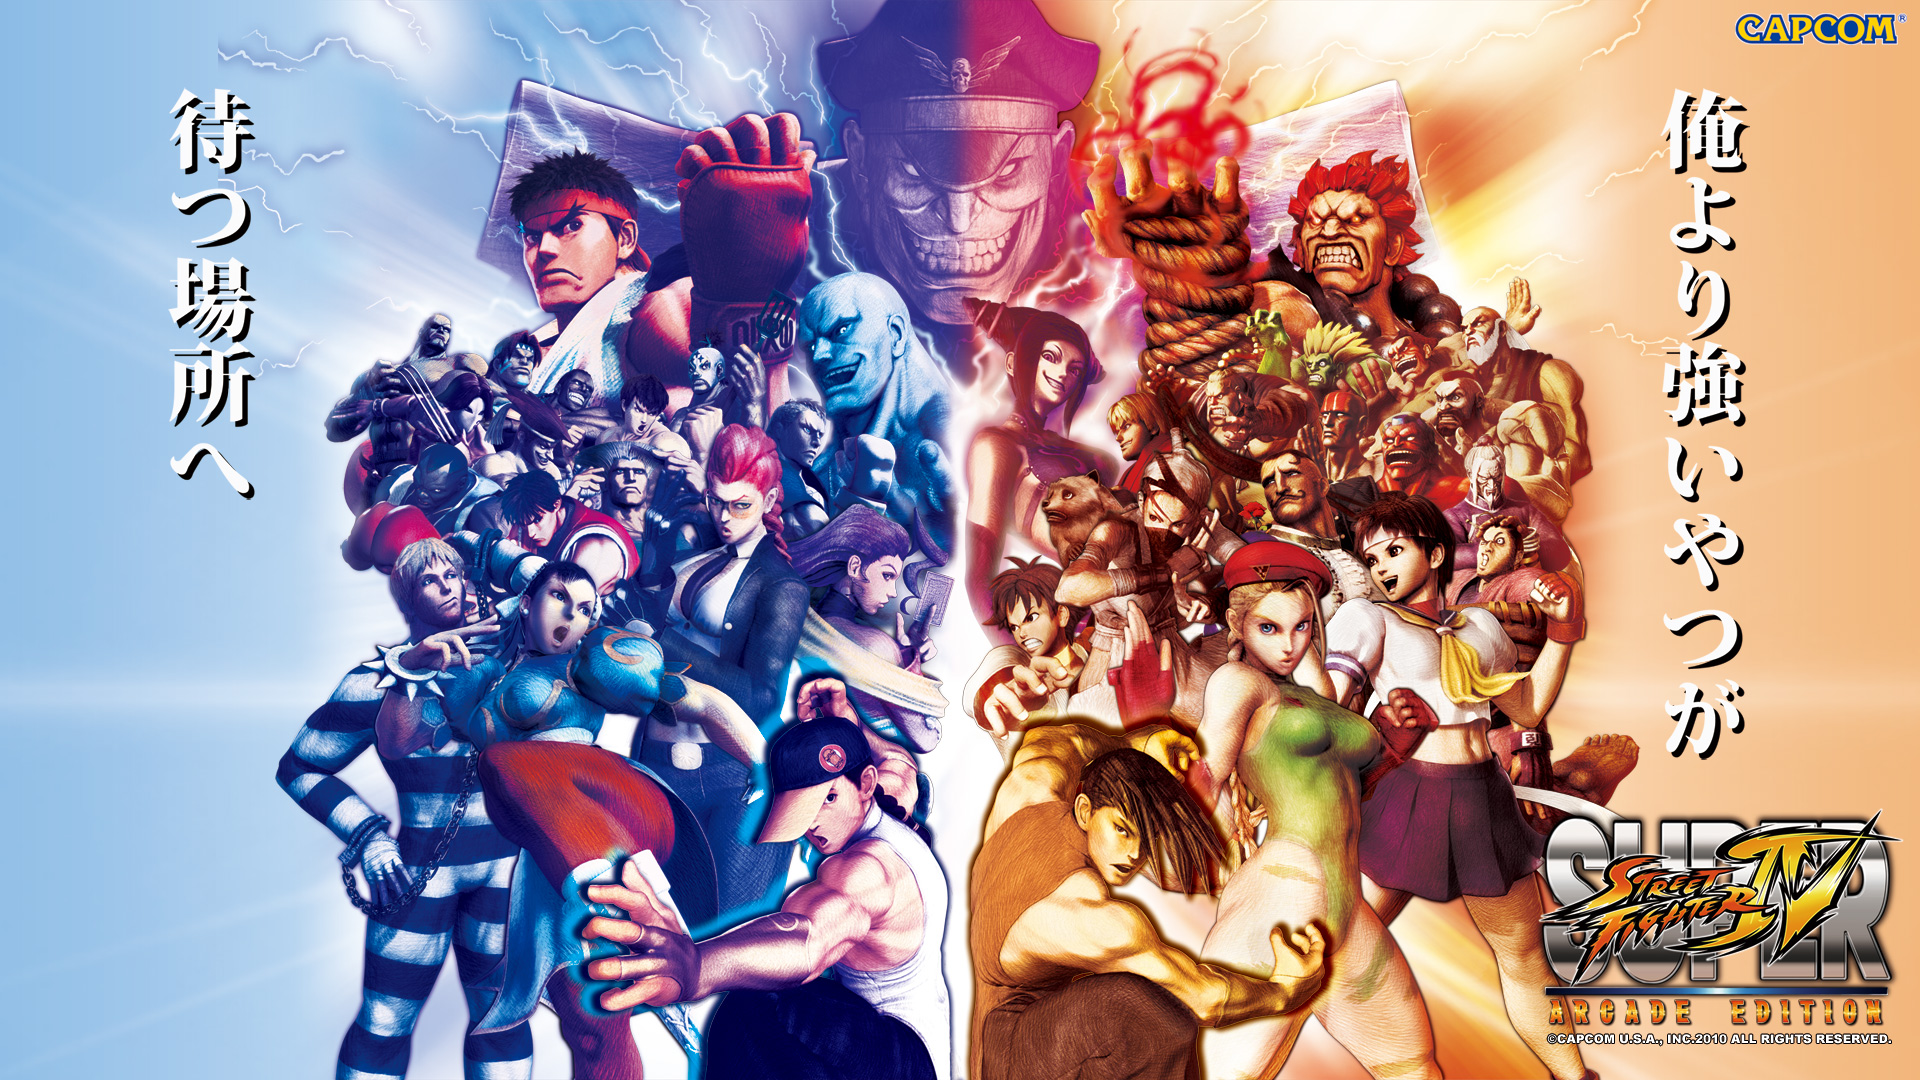 High Resolution Wallpaper | Super Street Fighter IV: Arcade Edition 1920x1080 px